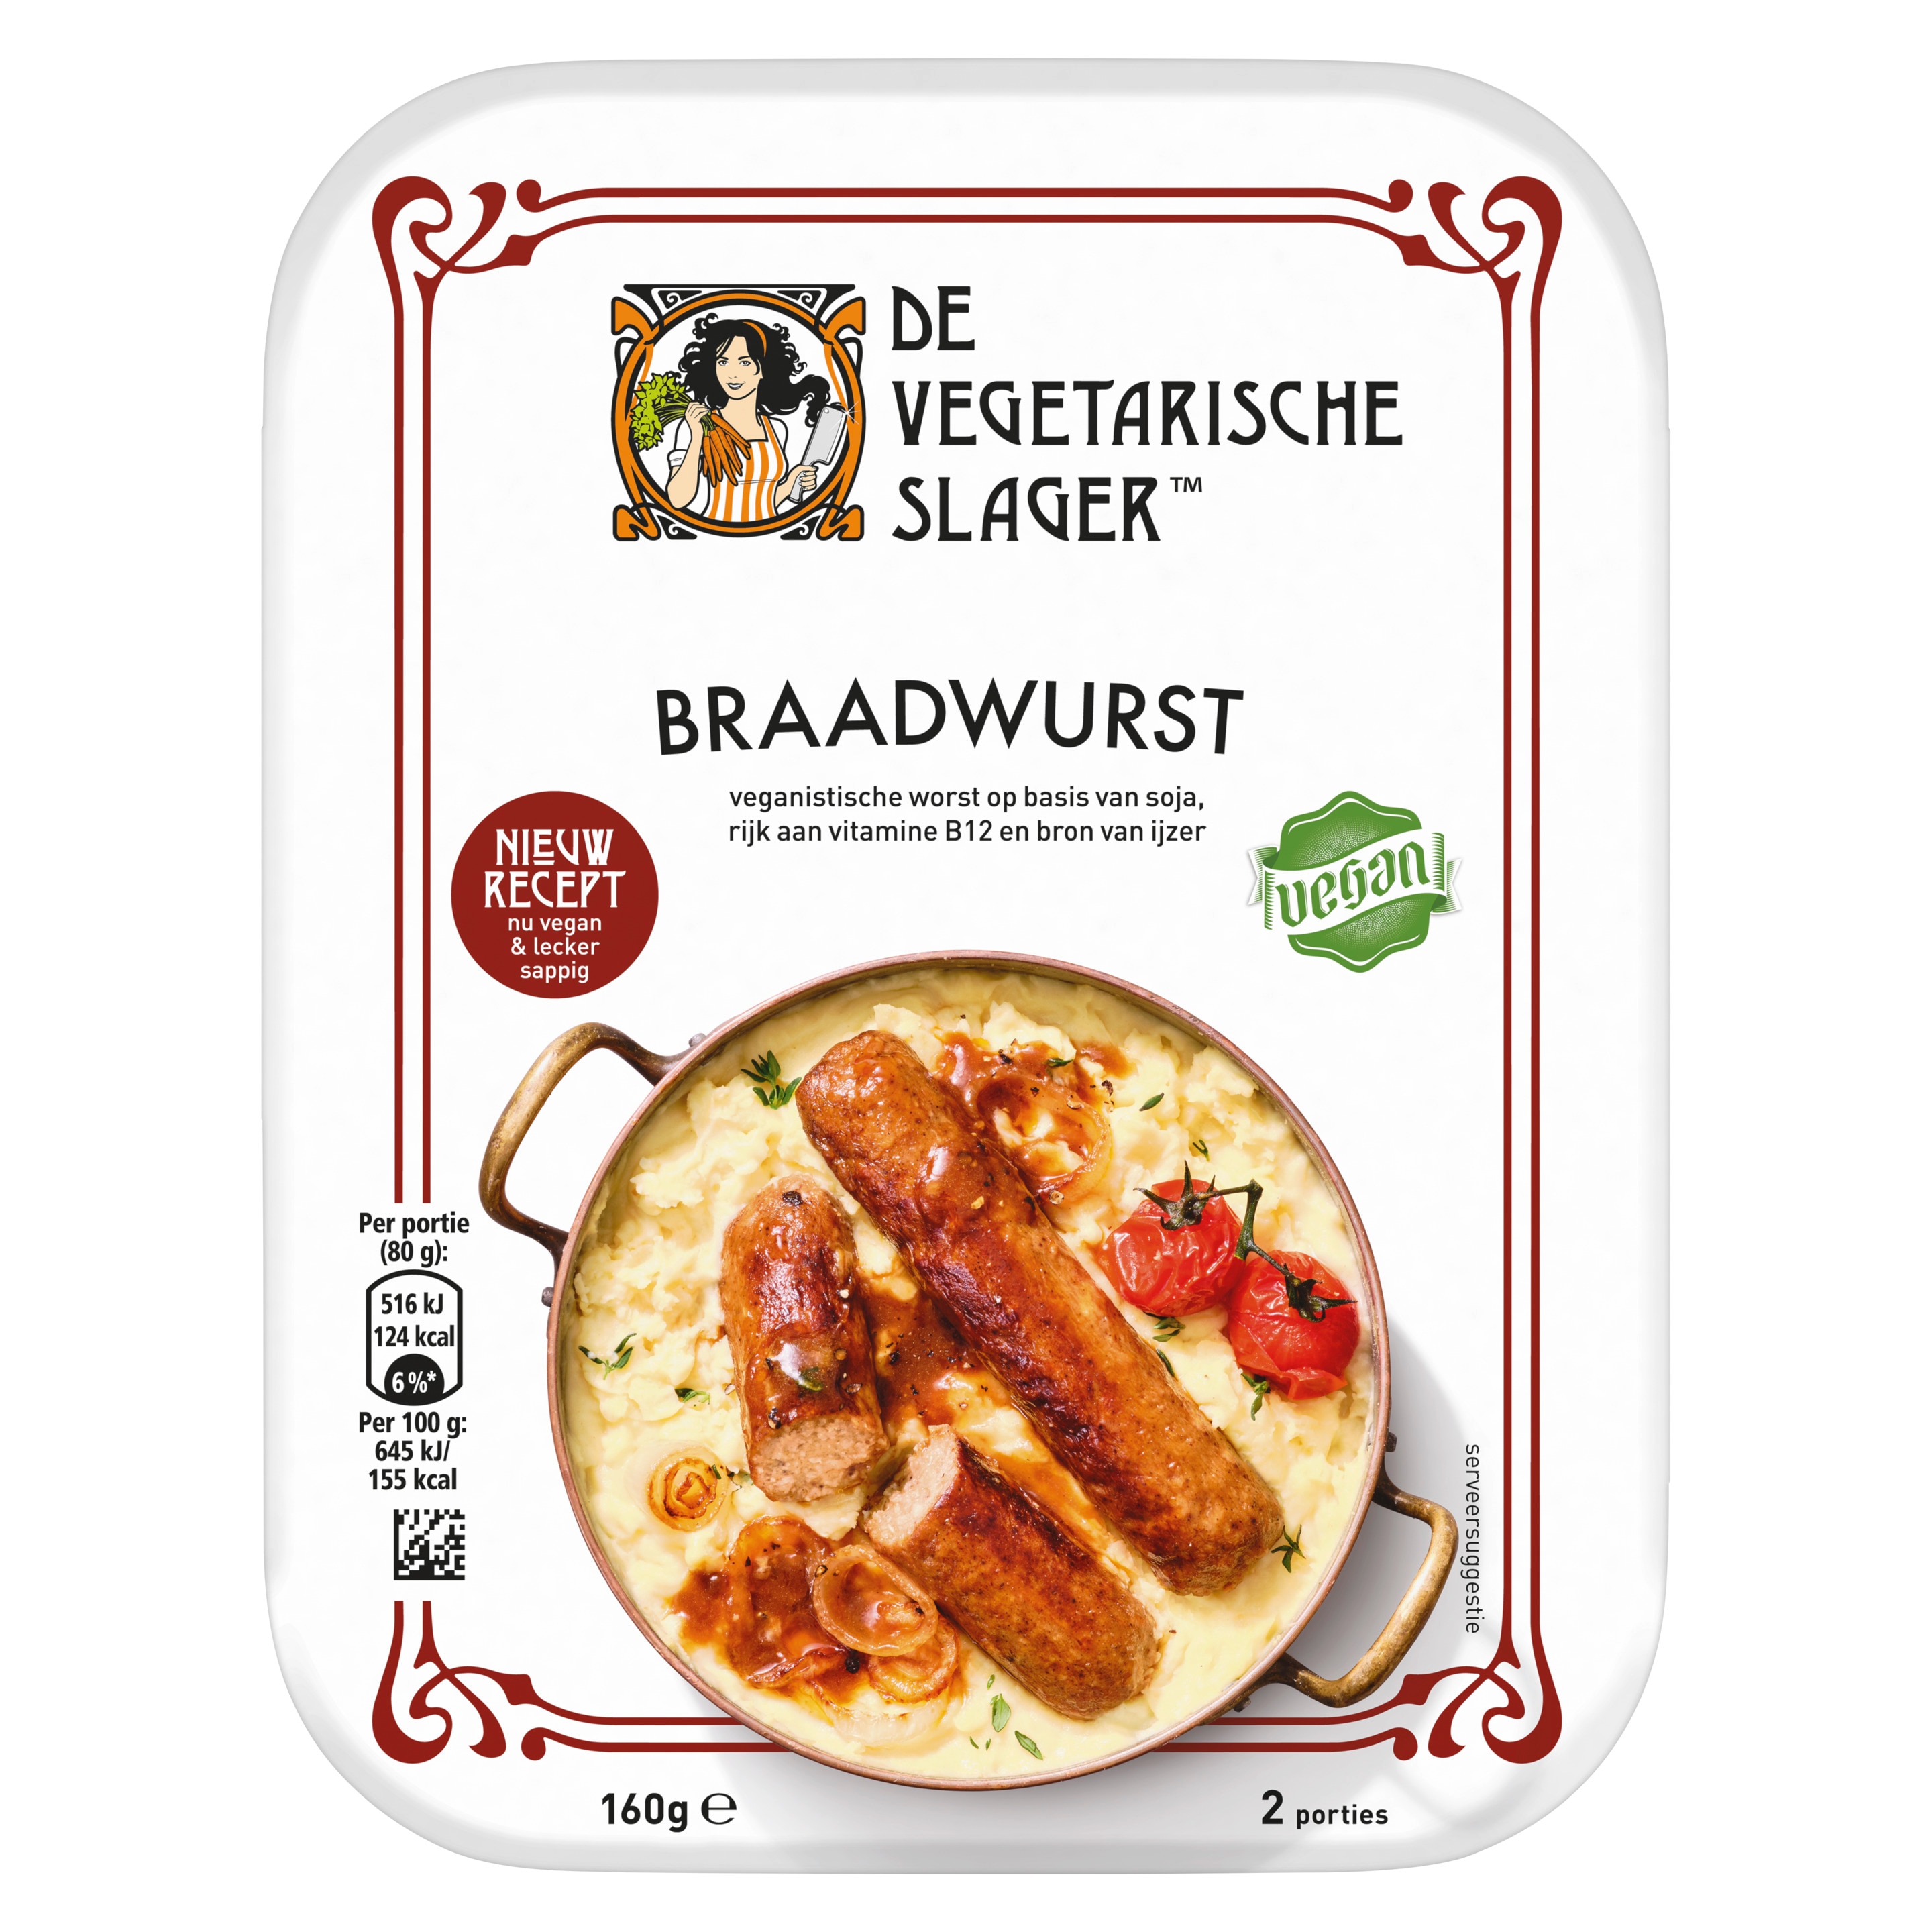 Braadwurst